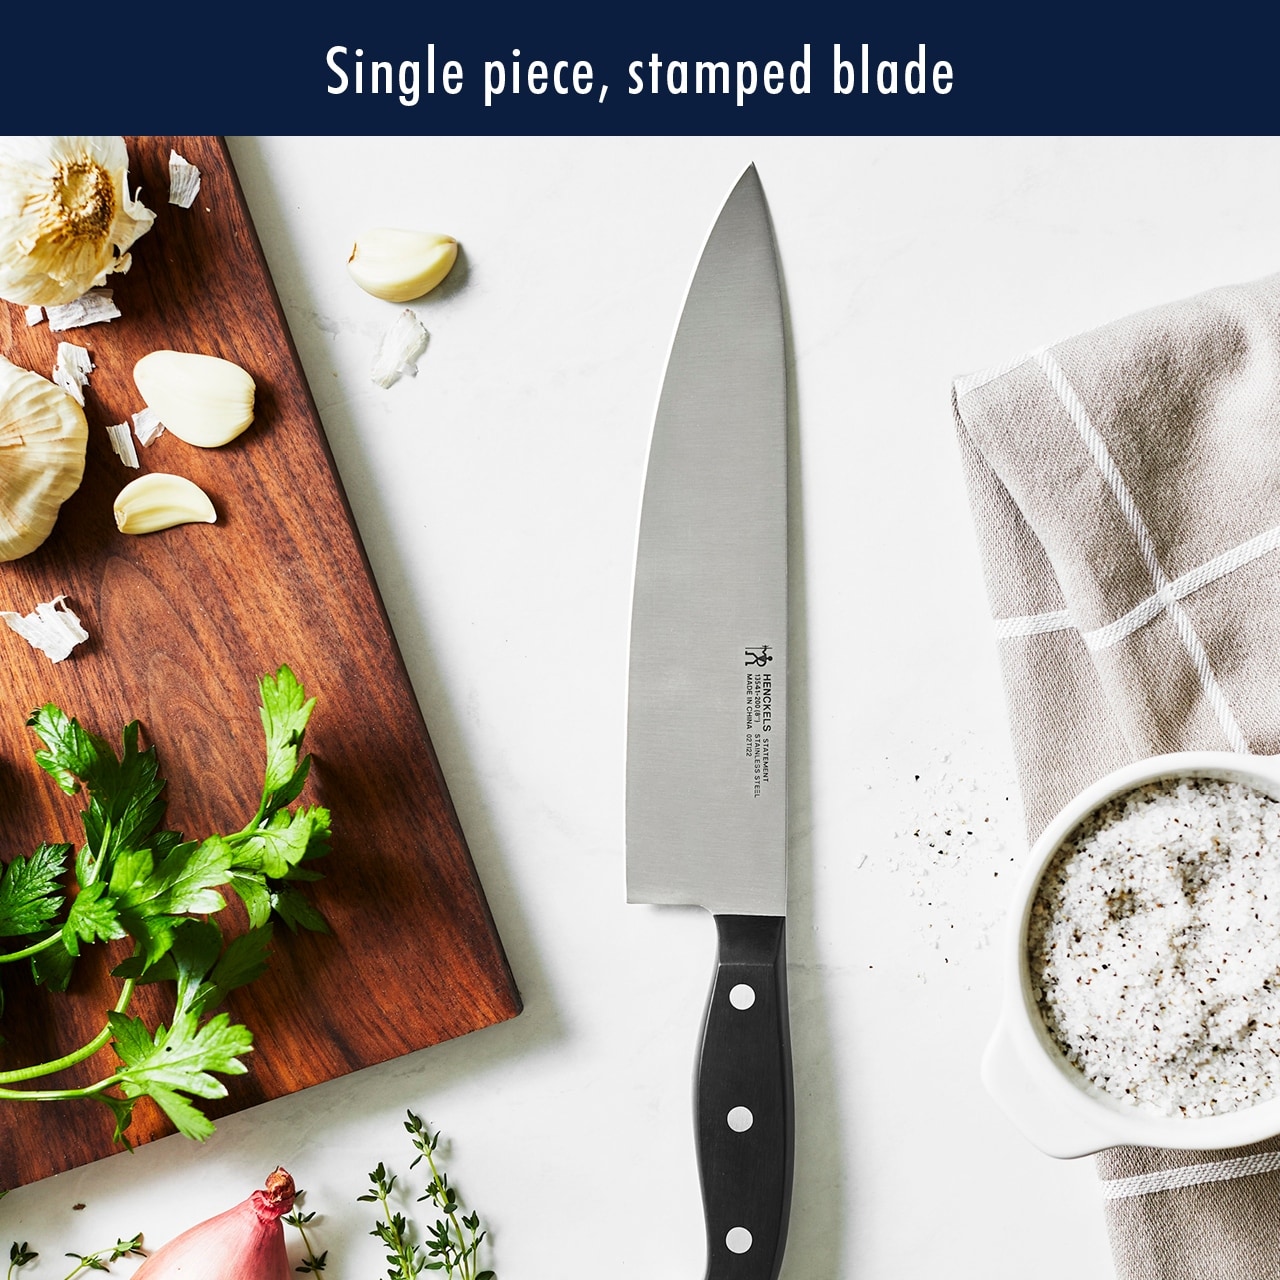 HENCKELS Statement Self-Sharpening Knife Set with Block, Chef